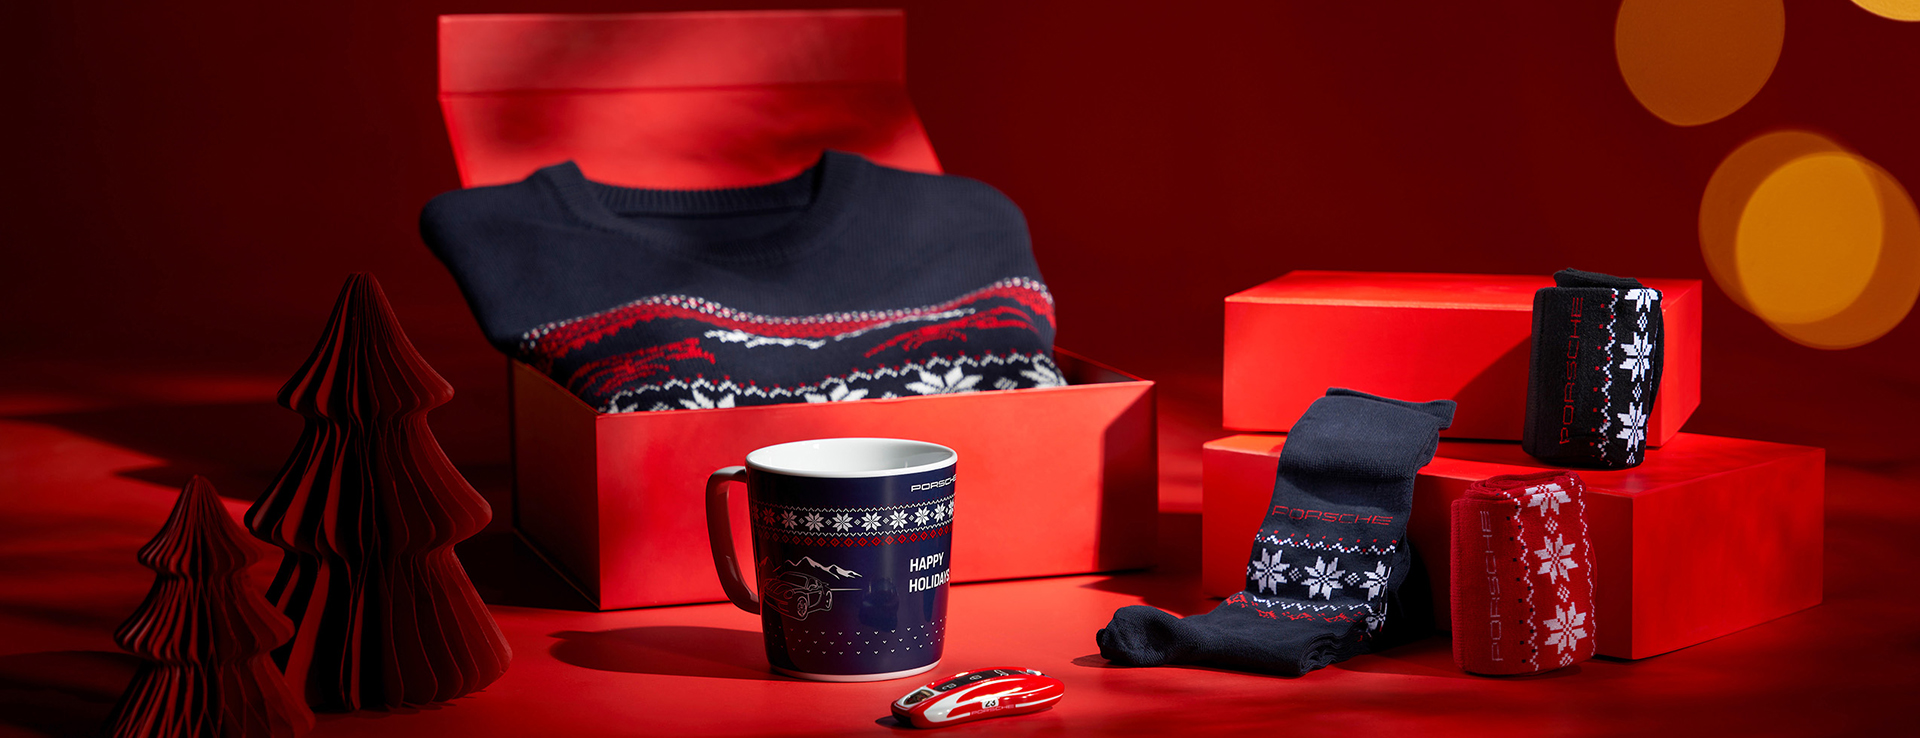 Porsche gifts including socks, mug, car keys and Porsche Christmas jumper